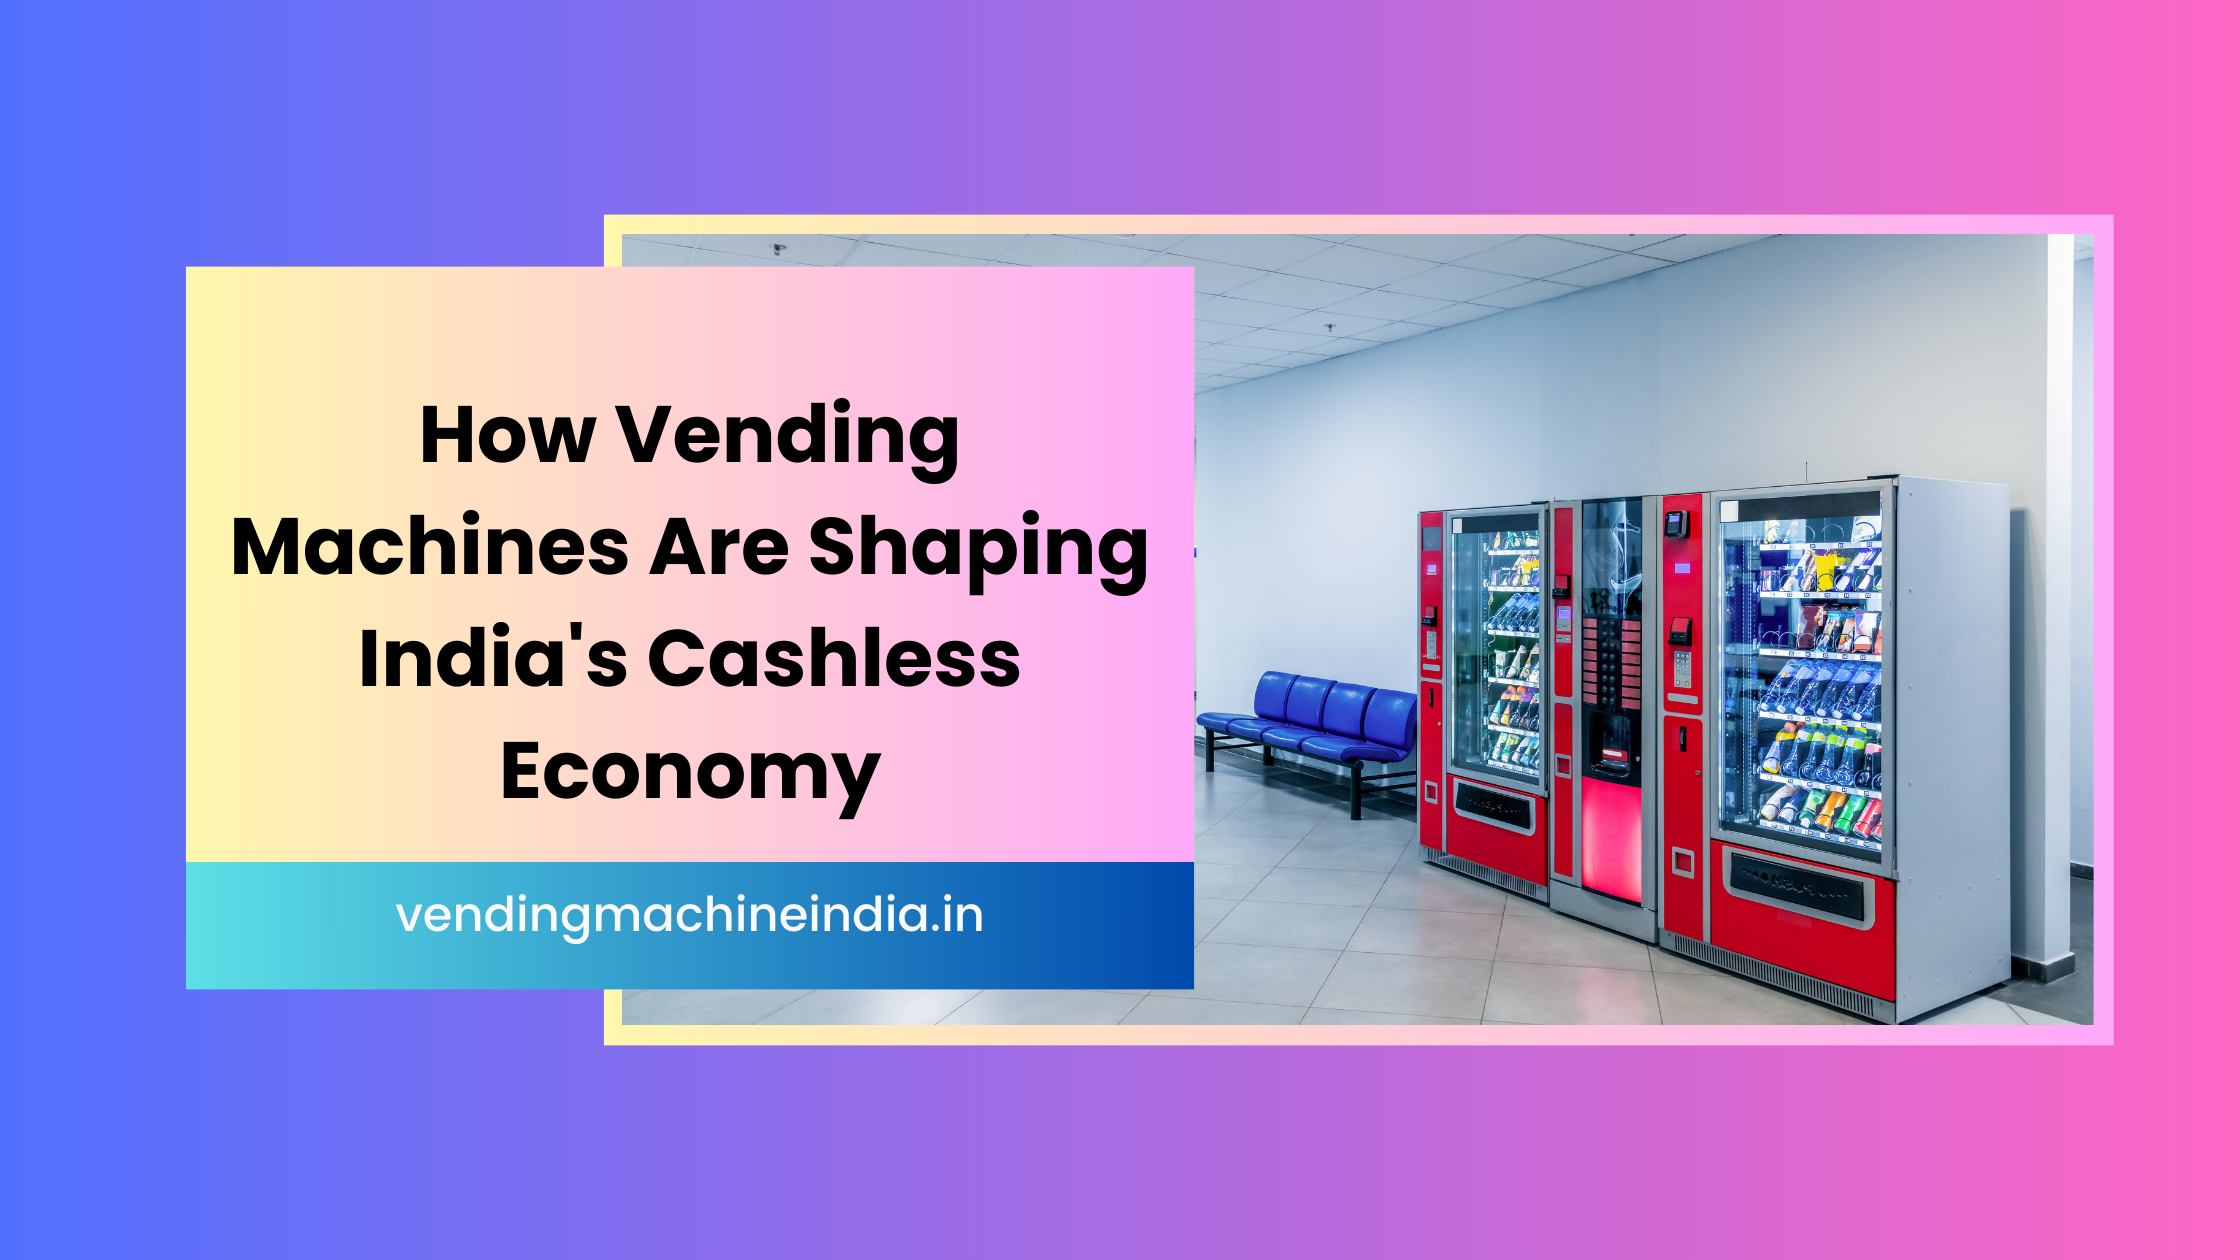 How Vending Machines Are Shaping India's Cashless Economy